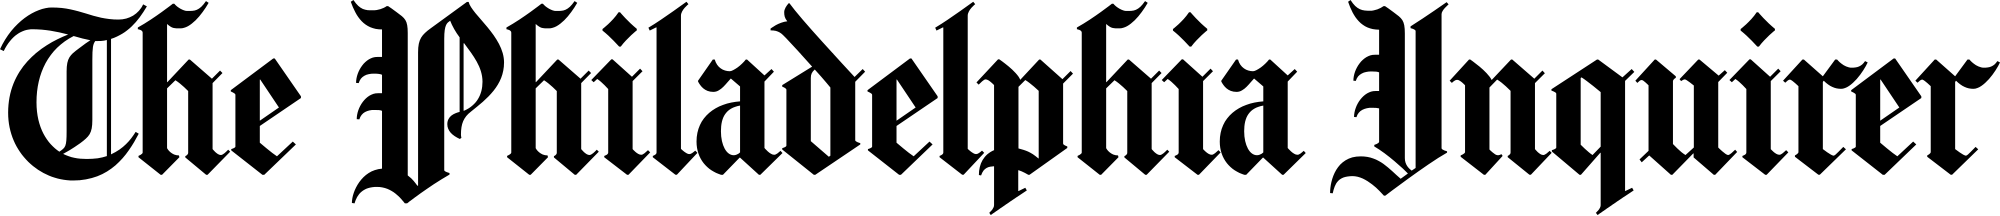 philadelphia-inquirer-logo.png